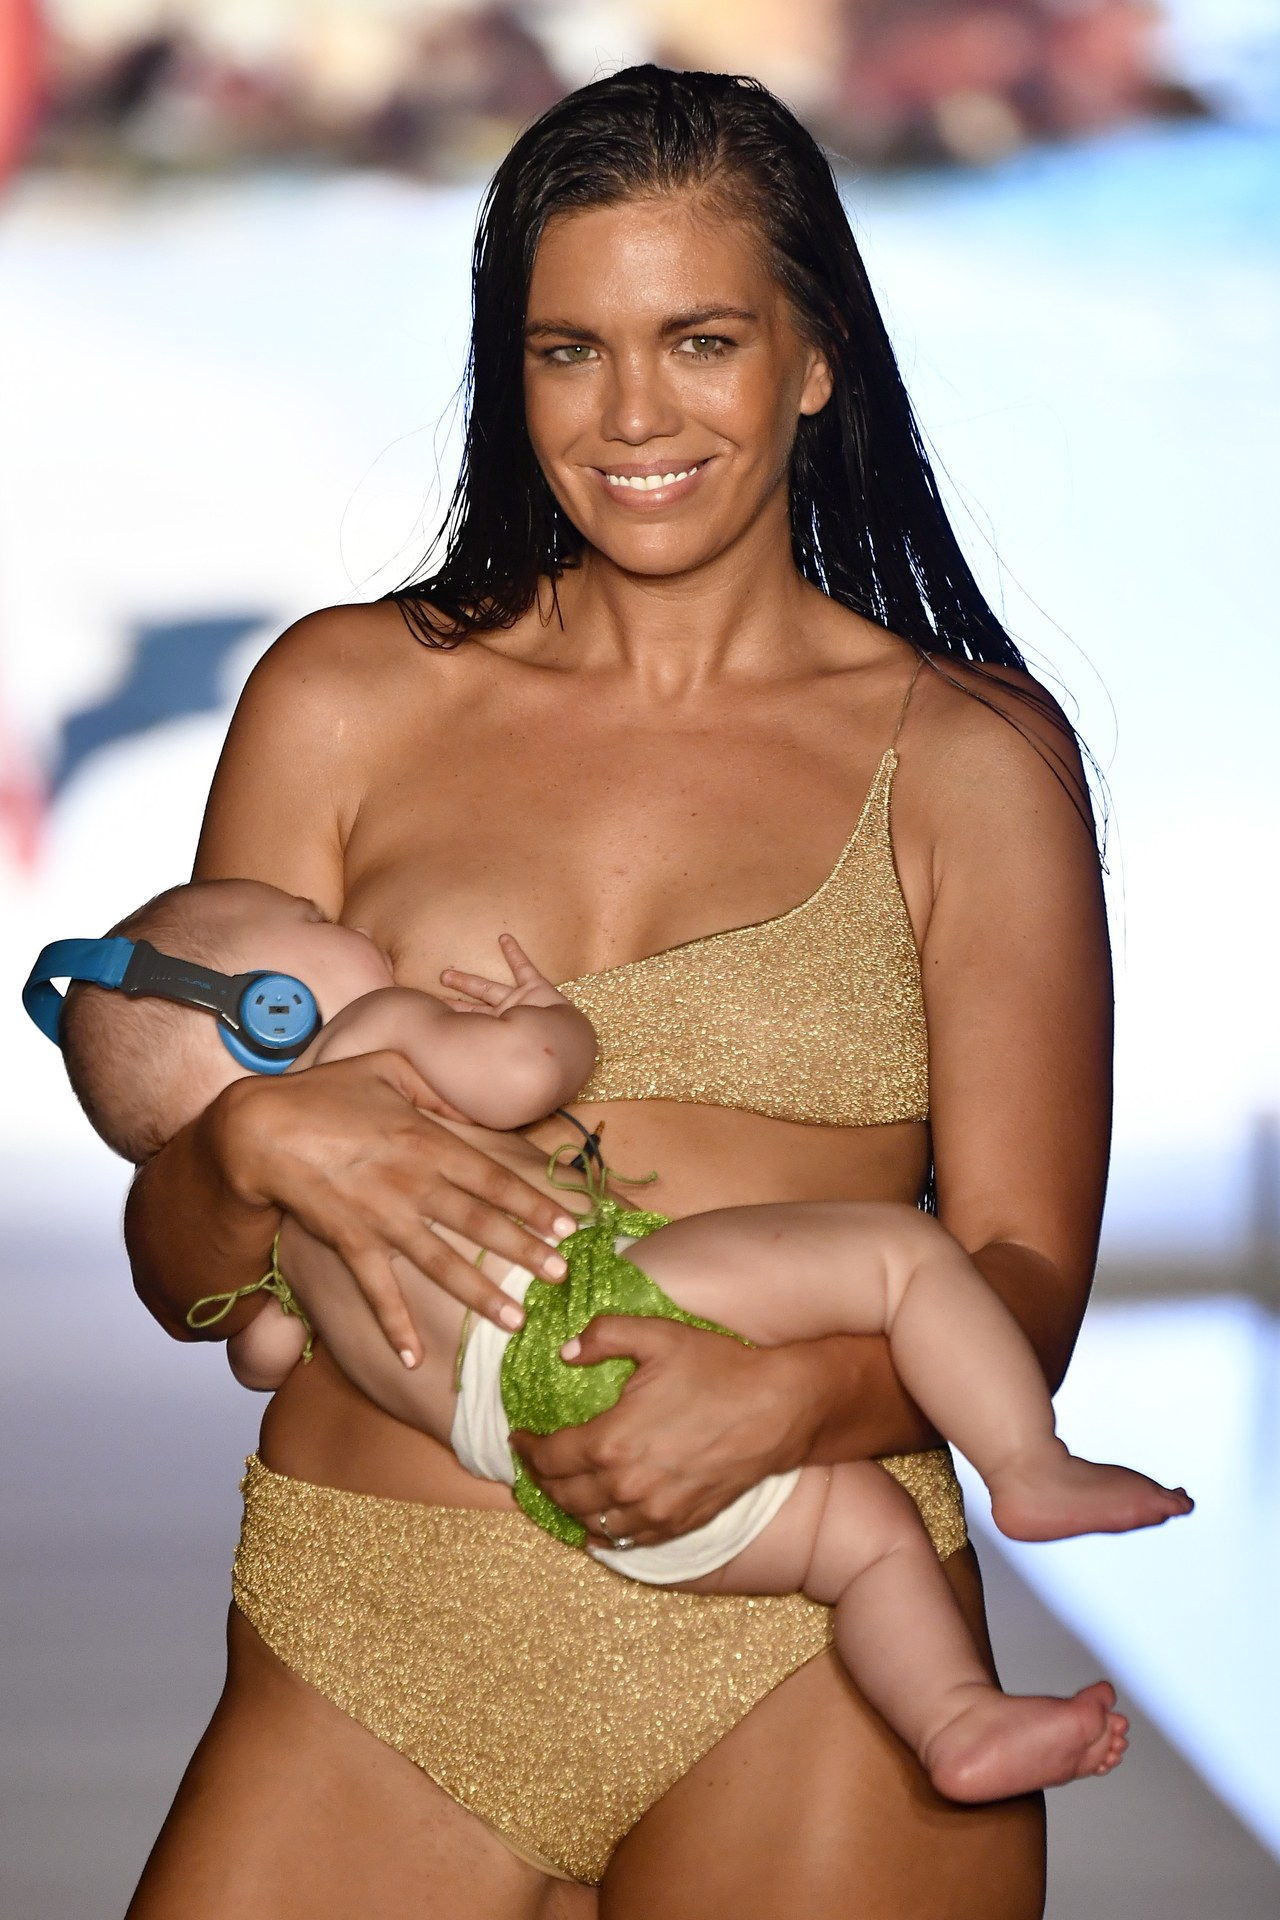 ا Model Walked the Runway Breastfeeding Her 5-Month-Old Baby 3